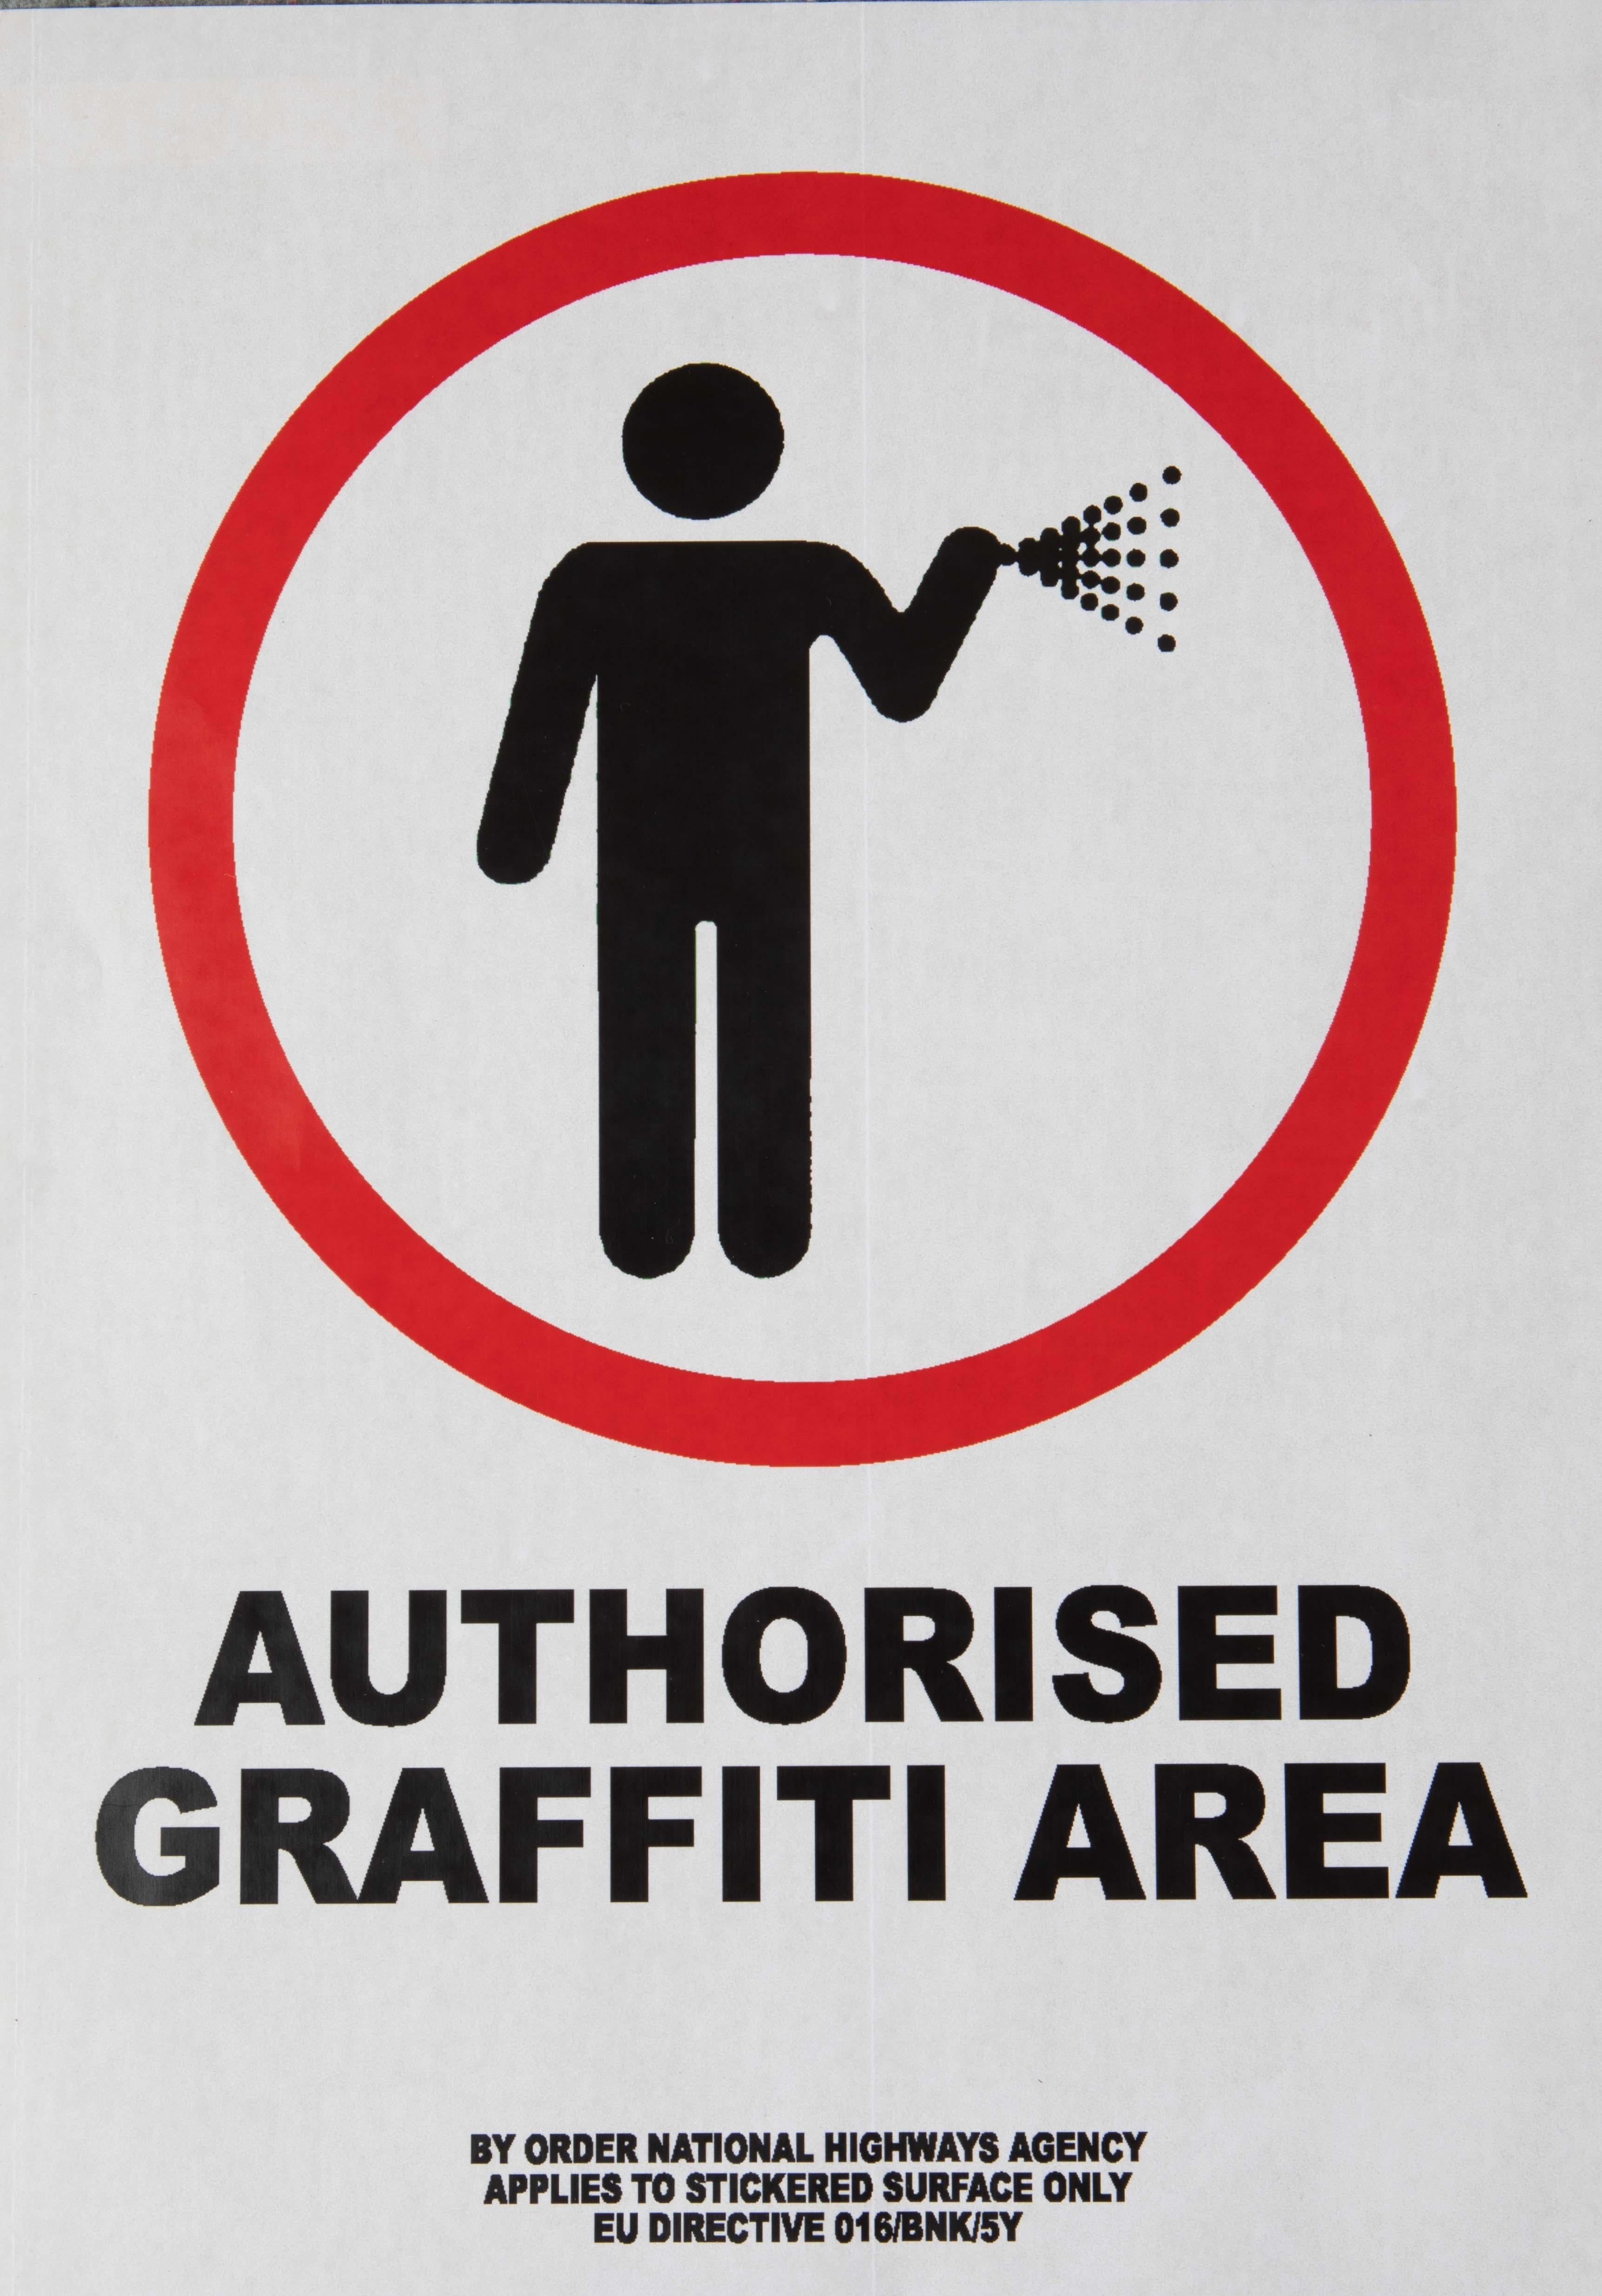 Authorized Graffiti Area - Art by Banksy